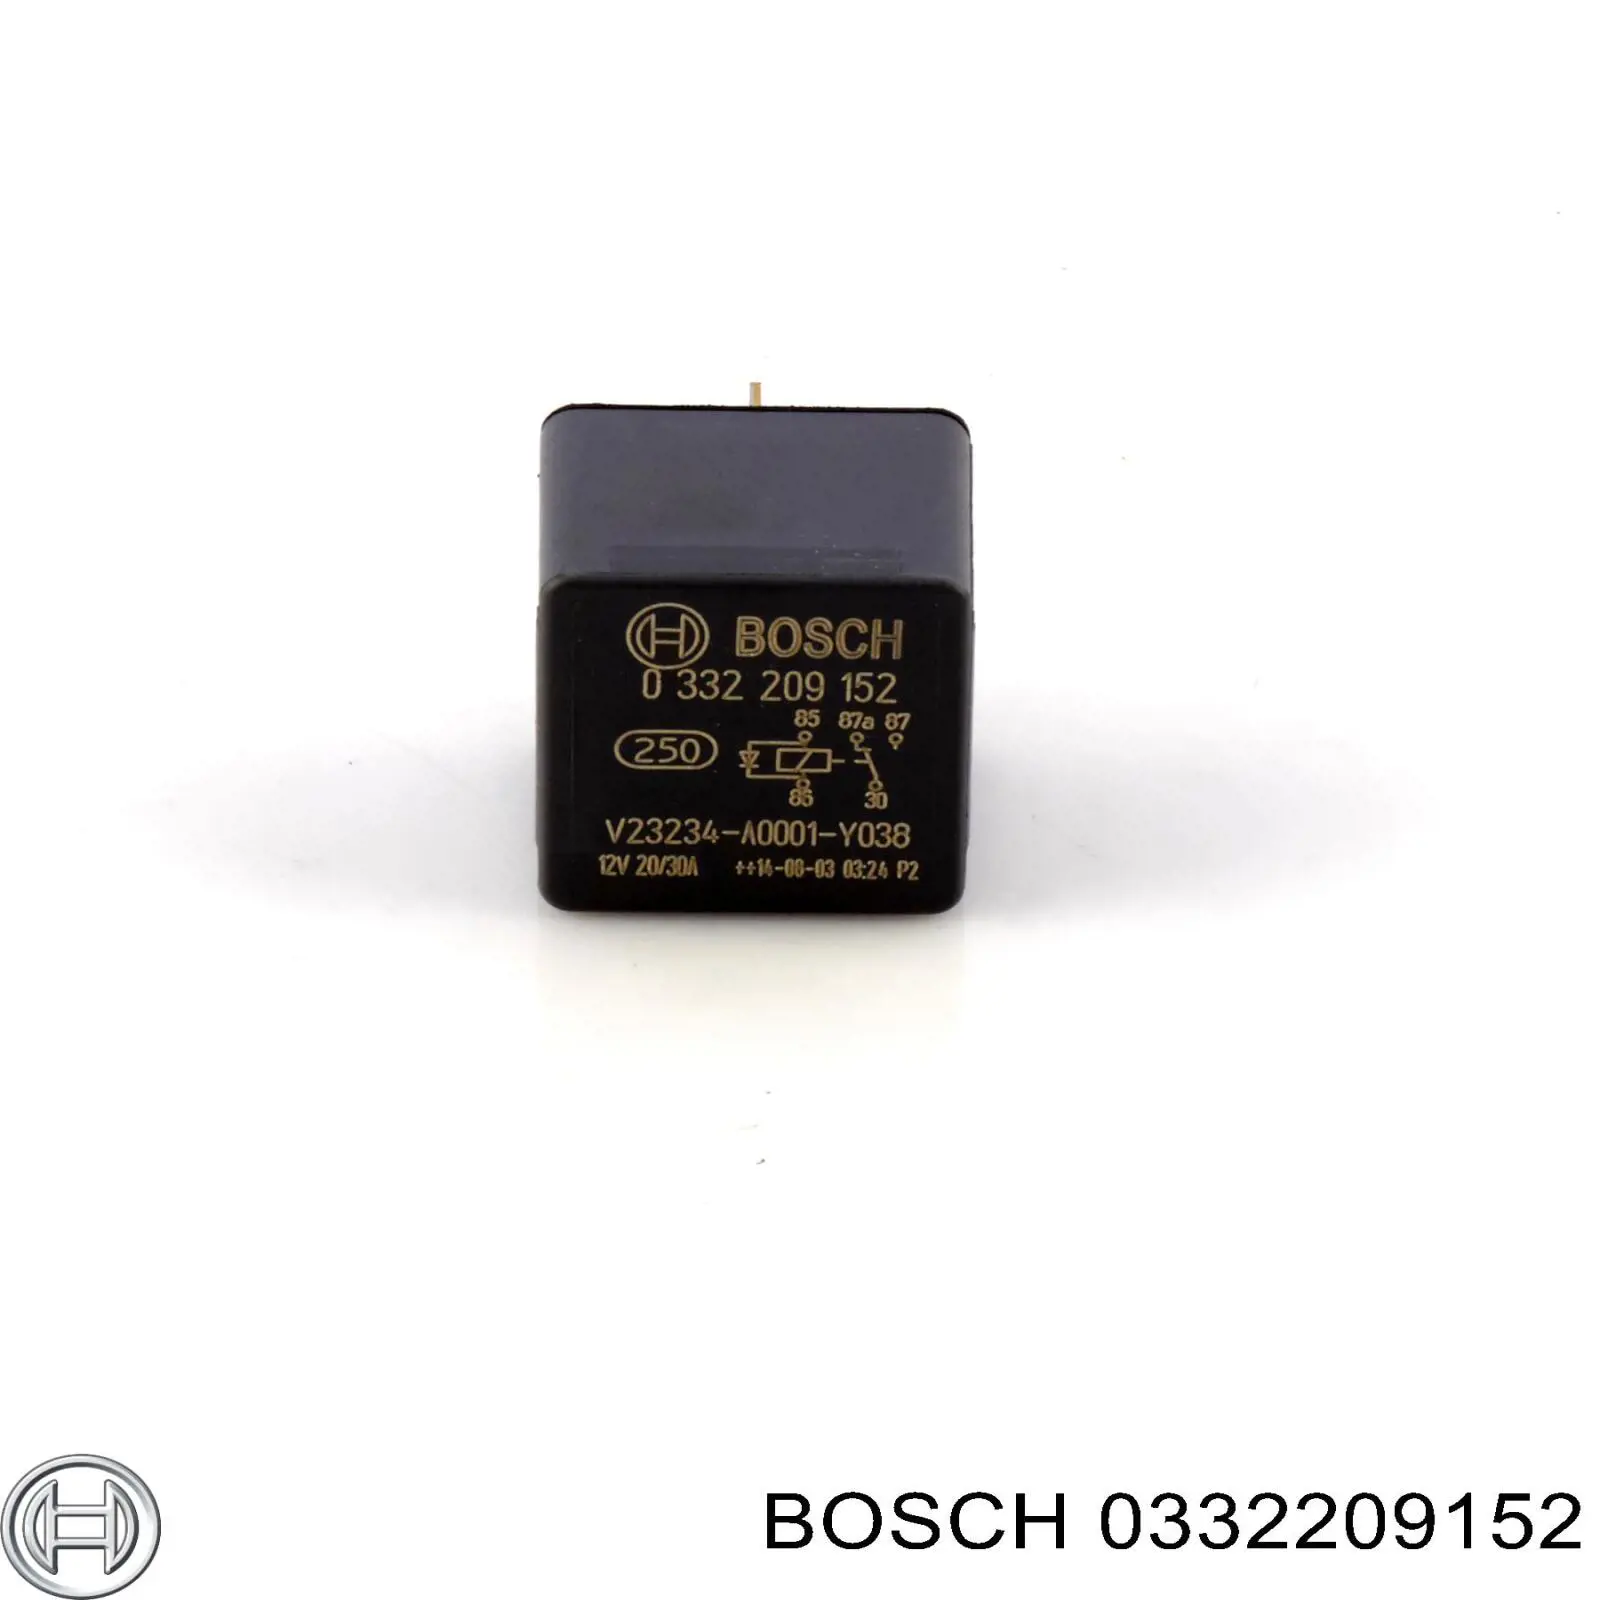 0332209152 Bosch relé eléctrico multifuncional